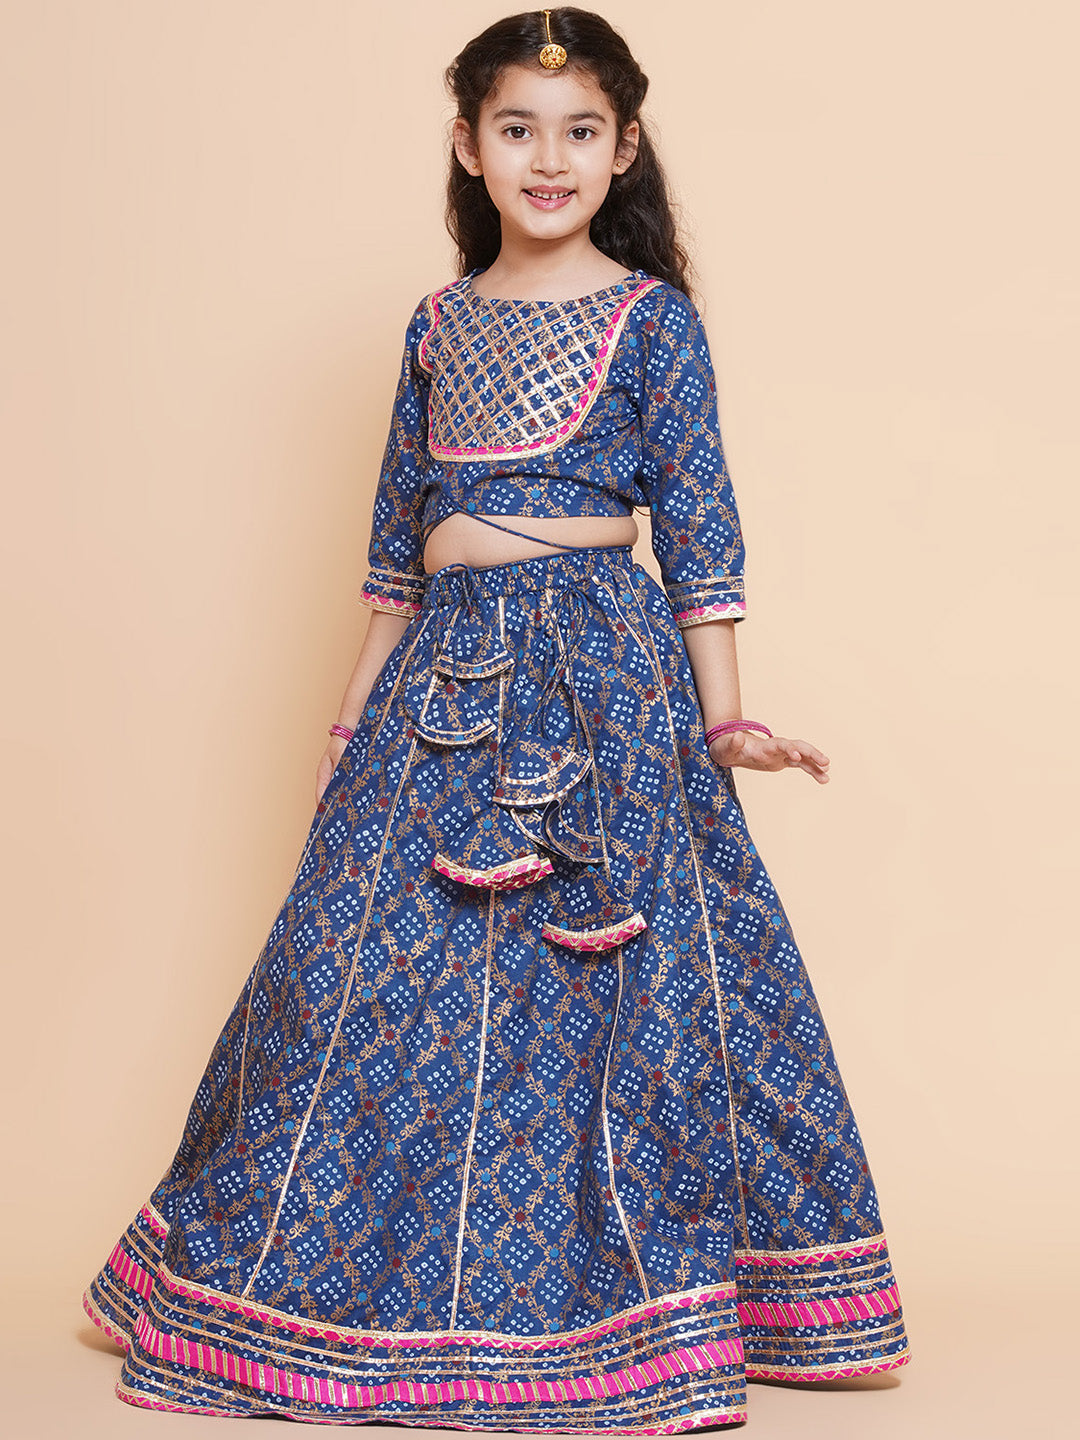 Indian Wear Lehenga Choli party dress new bollywood designs frocks for girls  | eBay